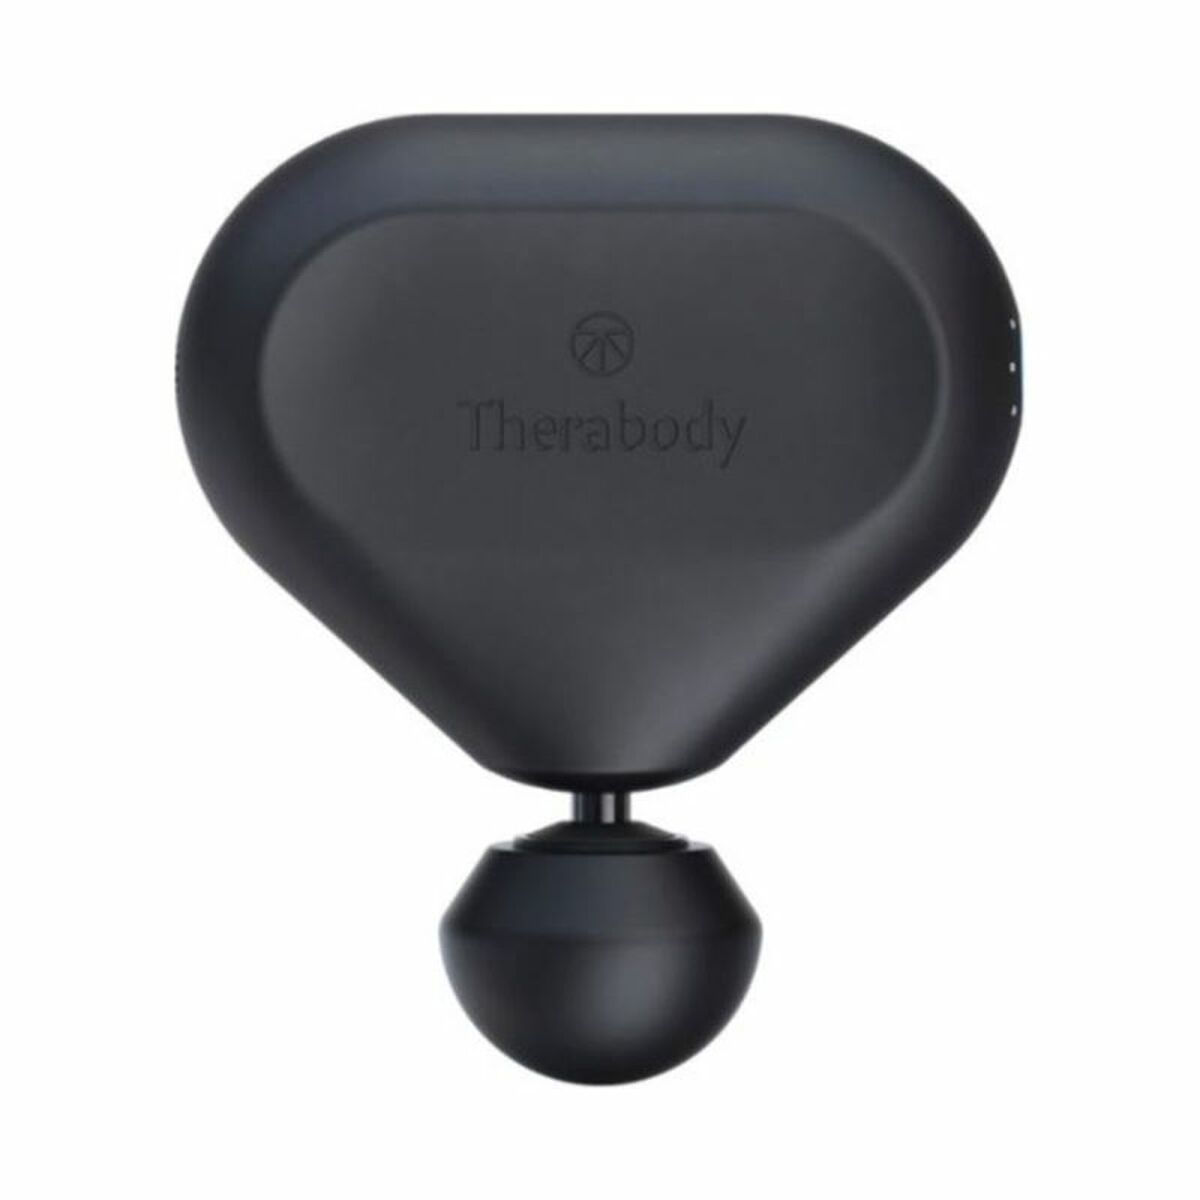 Terabody TG02017-01 Dispositivo di massaggi